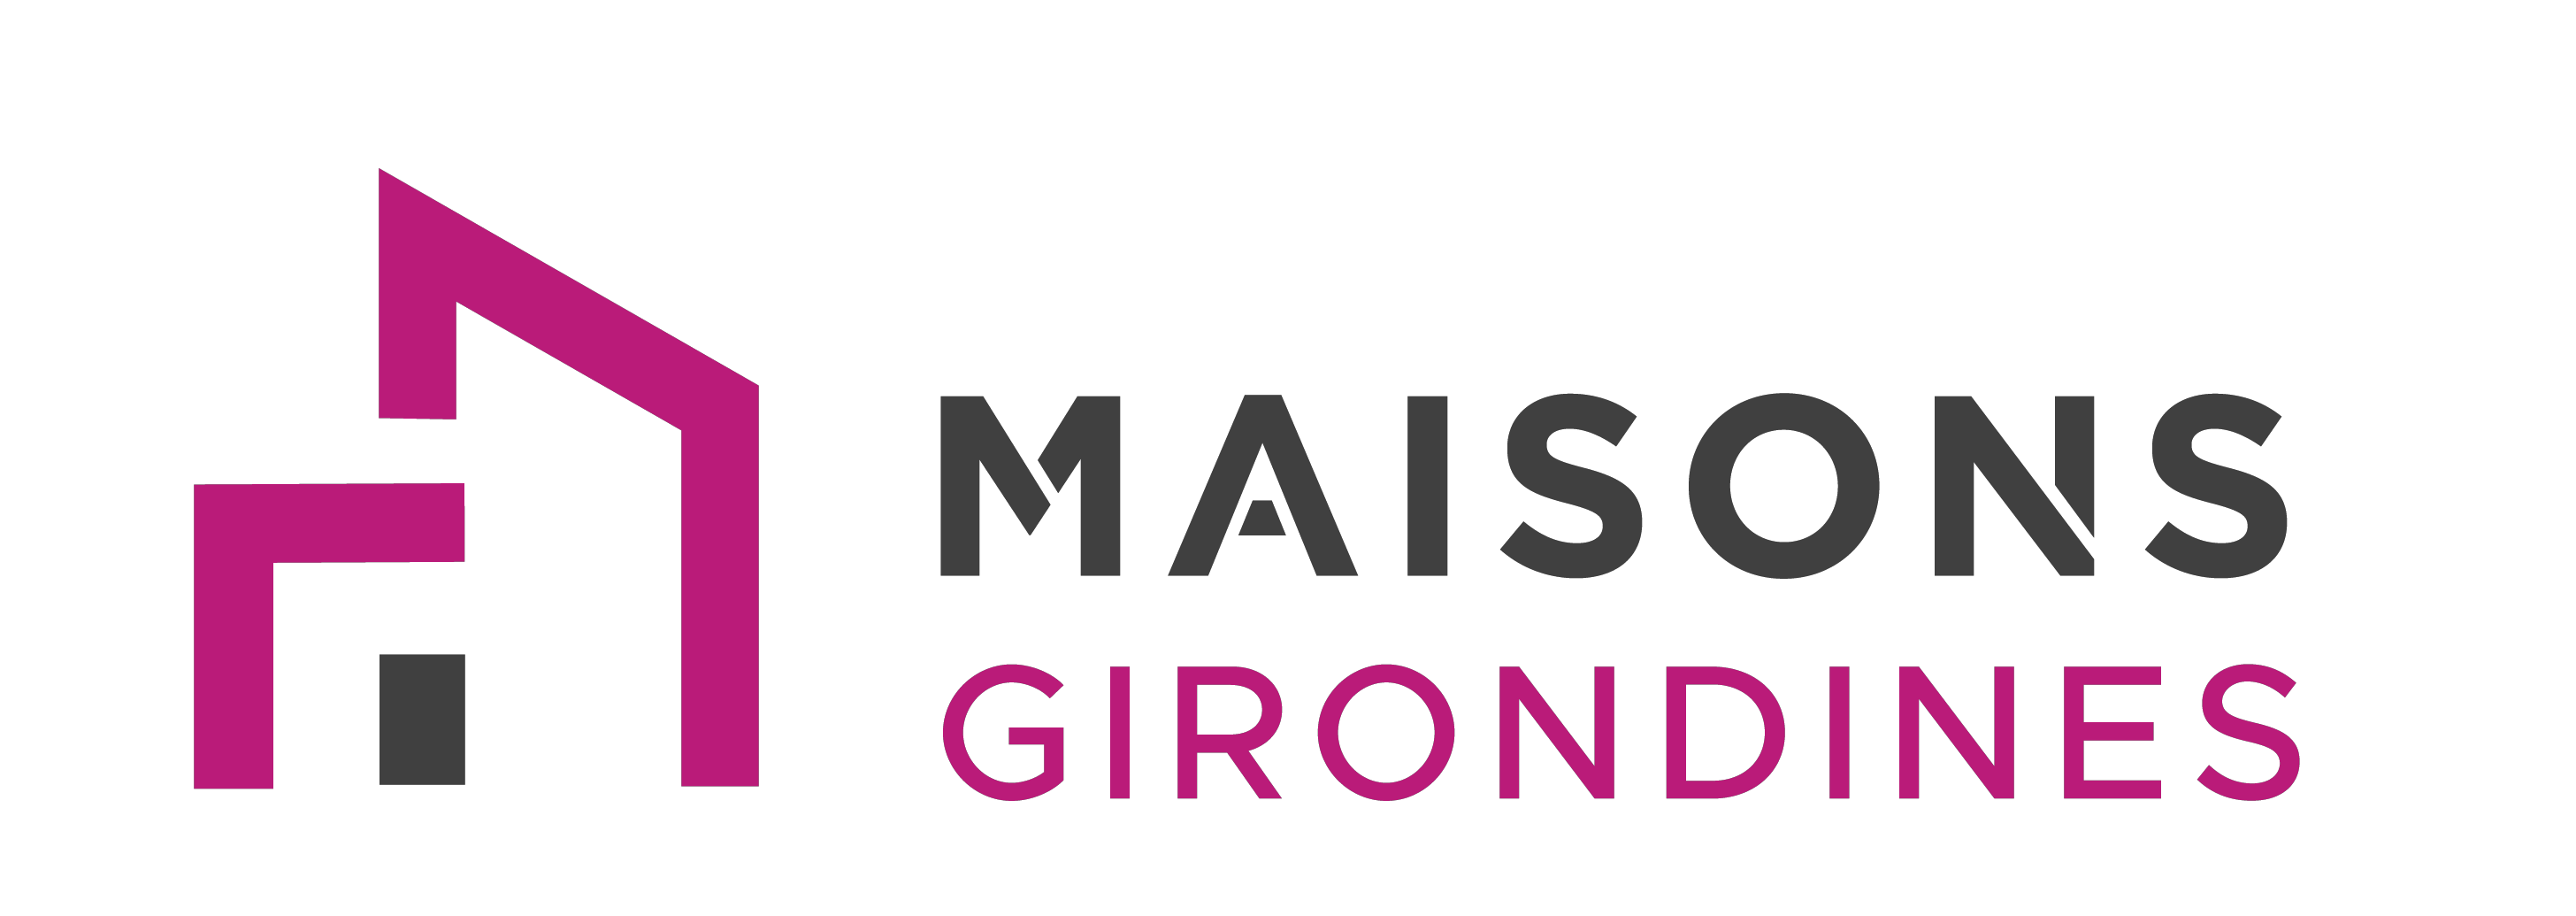 MAISONS GIRONDINES Logo